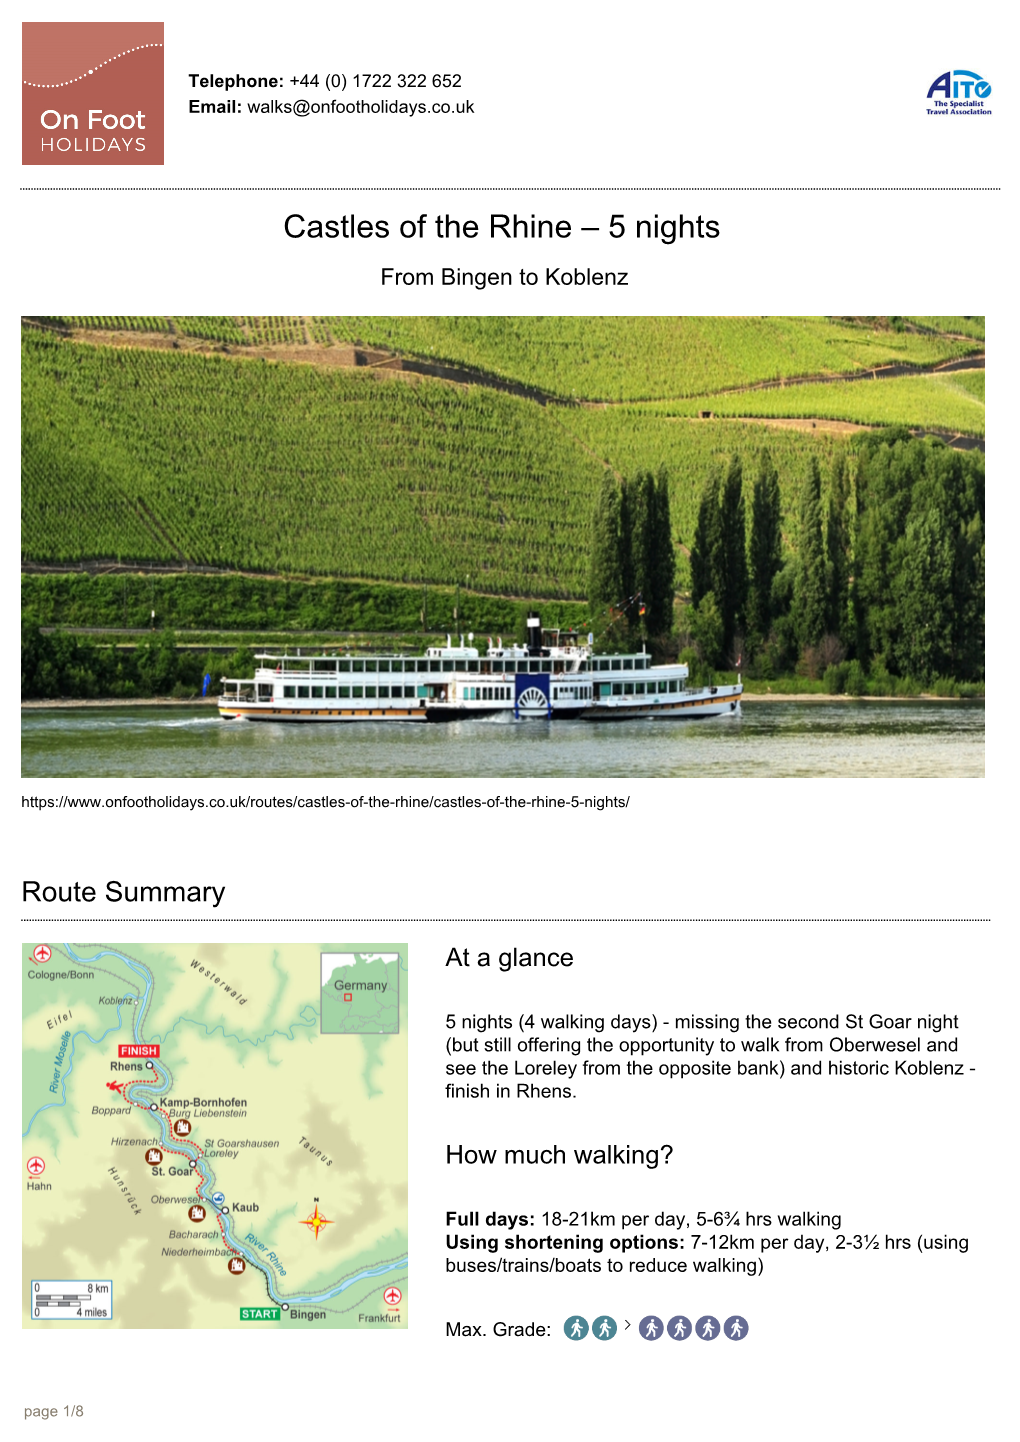 Castles of the Rhine – 5 Nights from Bingen to Koblenz